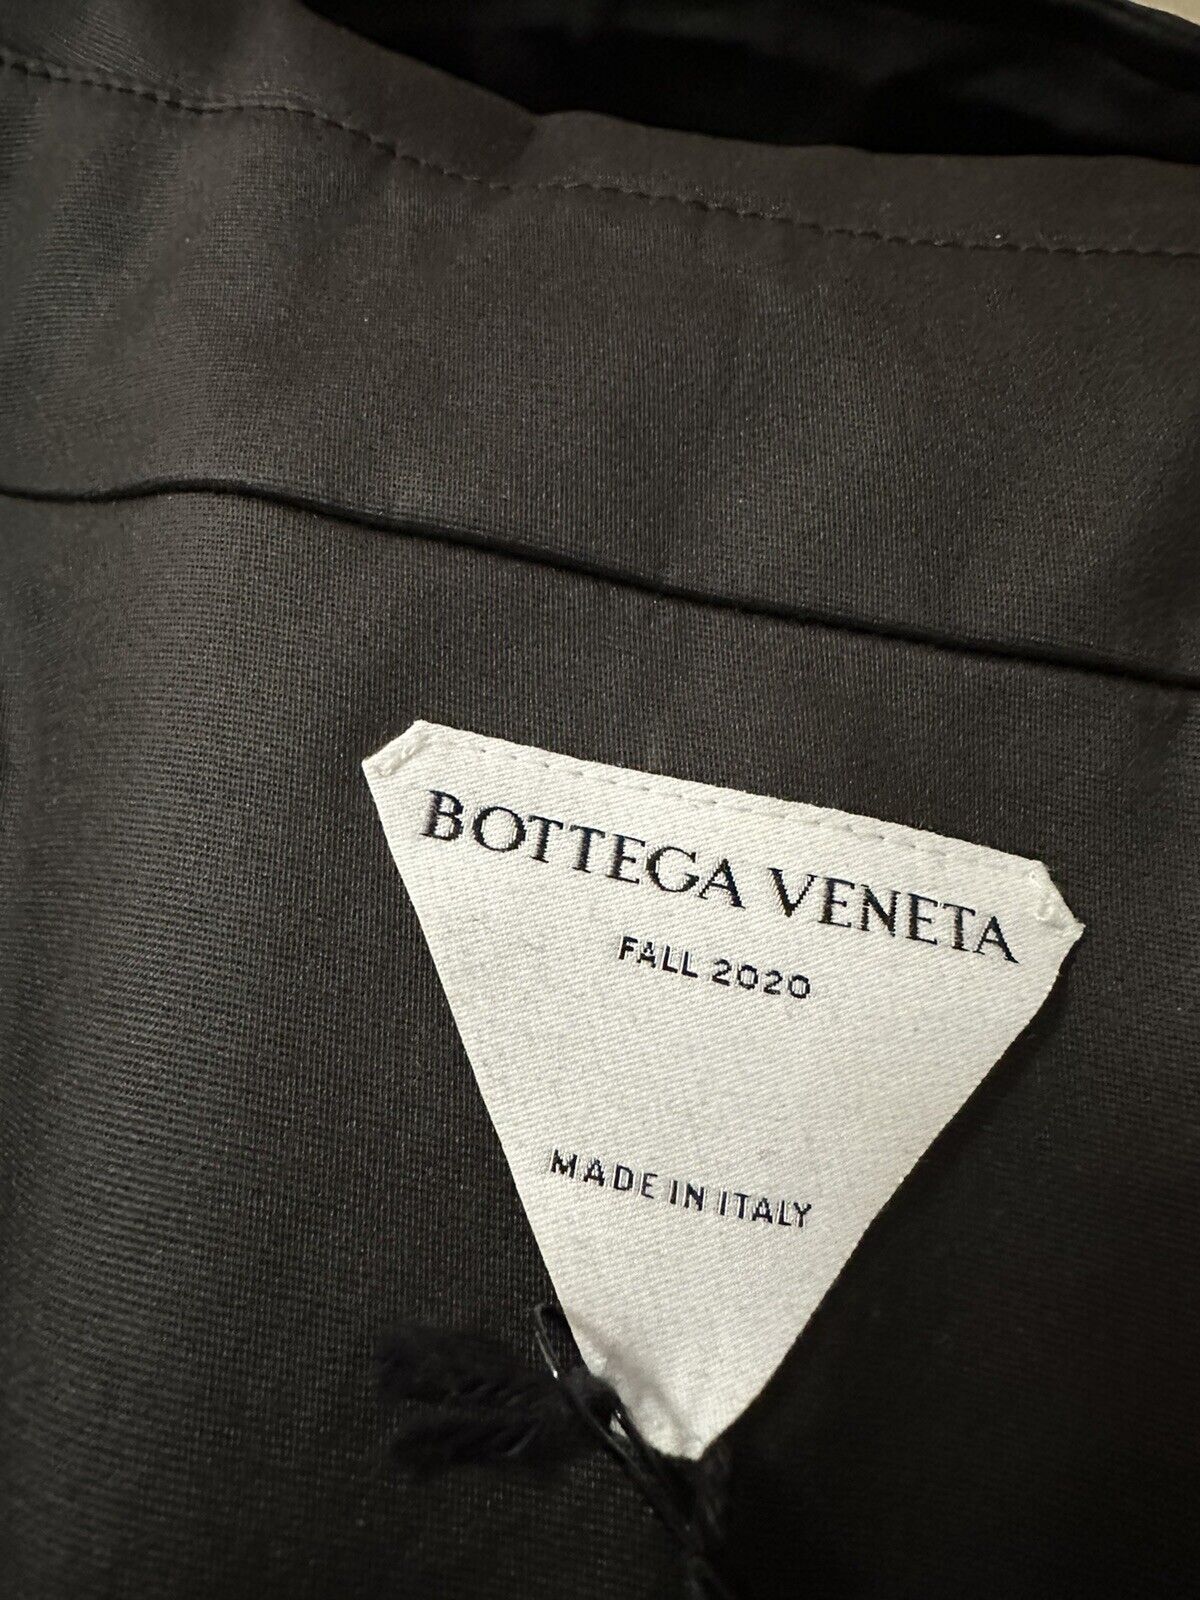 New $3100 Bottega Veneta Men Stretch Cotton Trench Coat Color DK Chocolate L